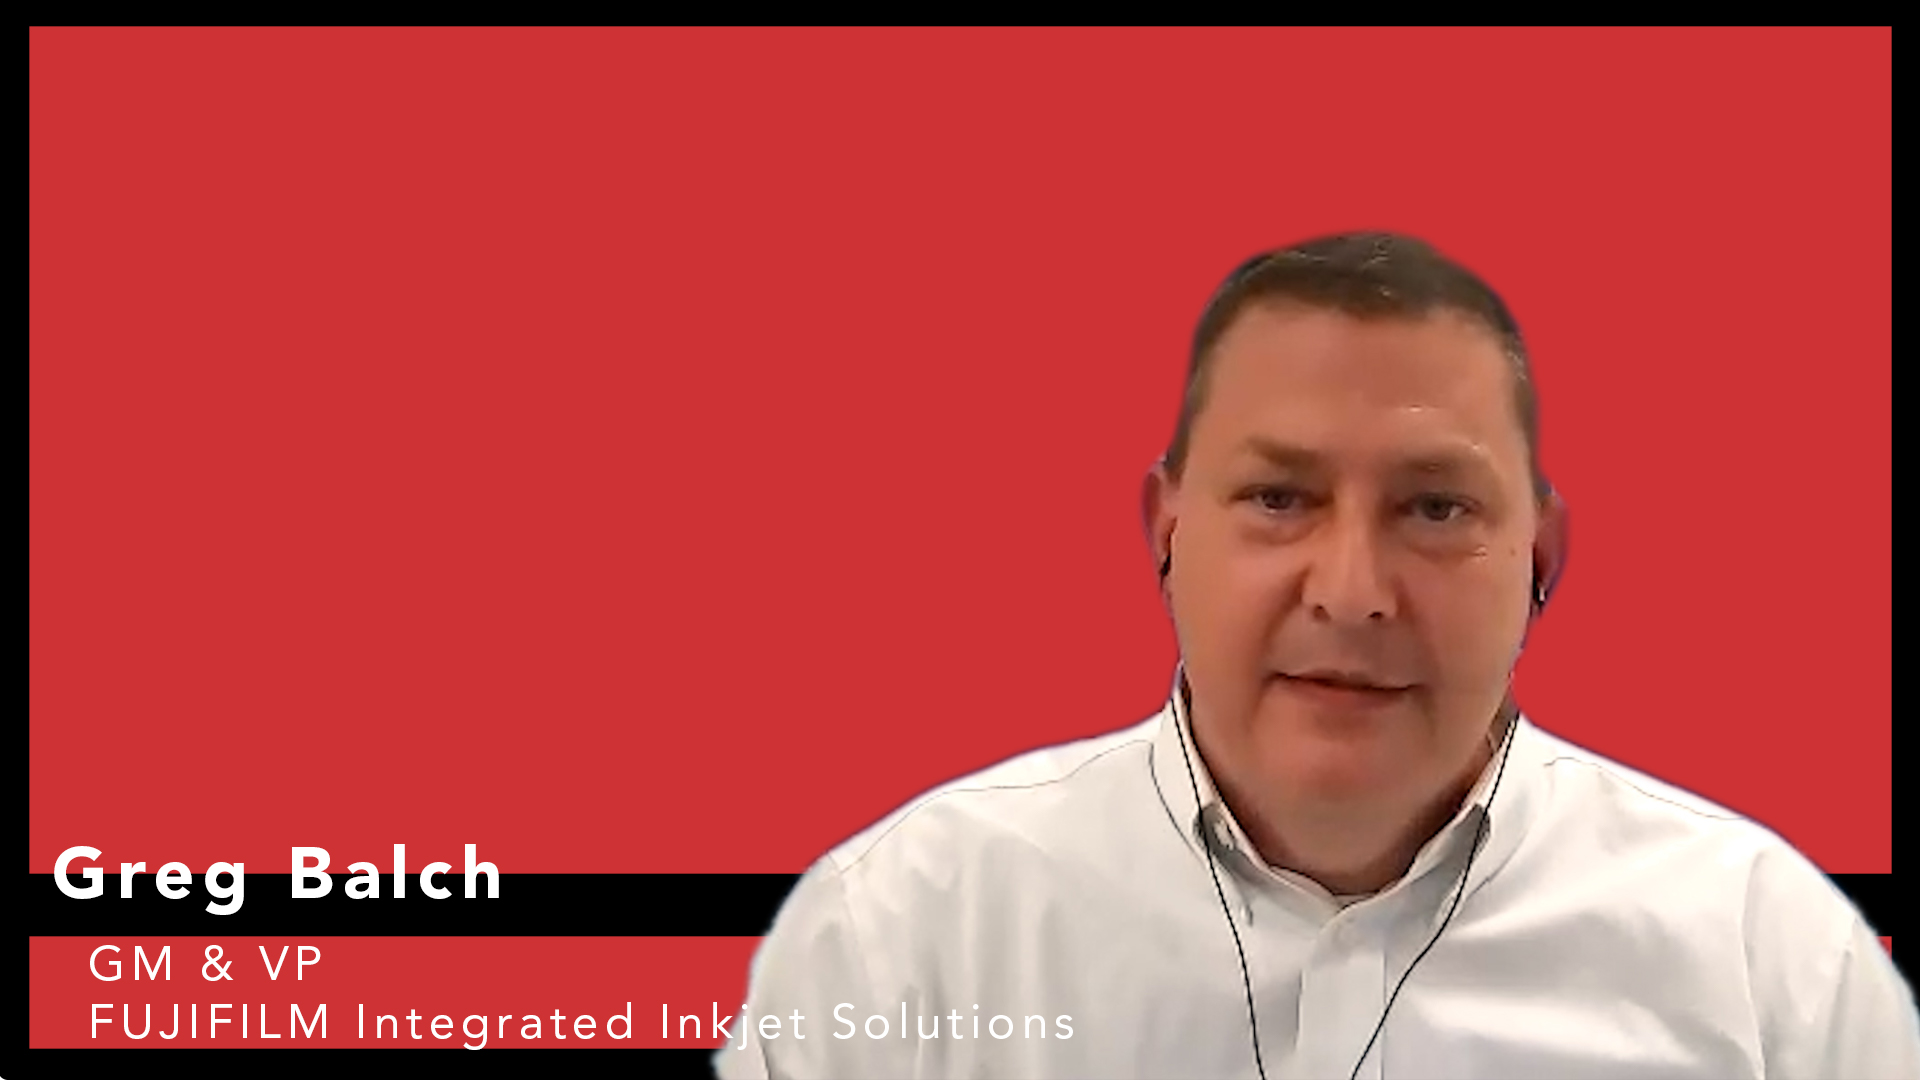 FUJIFILM ’s Greg Balch on FUJIFILM Integrated Inkjet Solutions